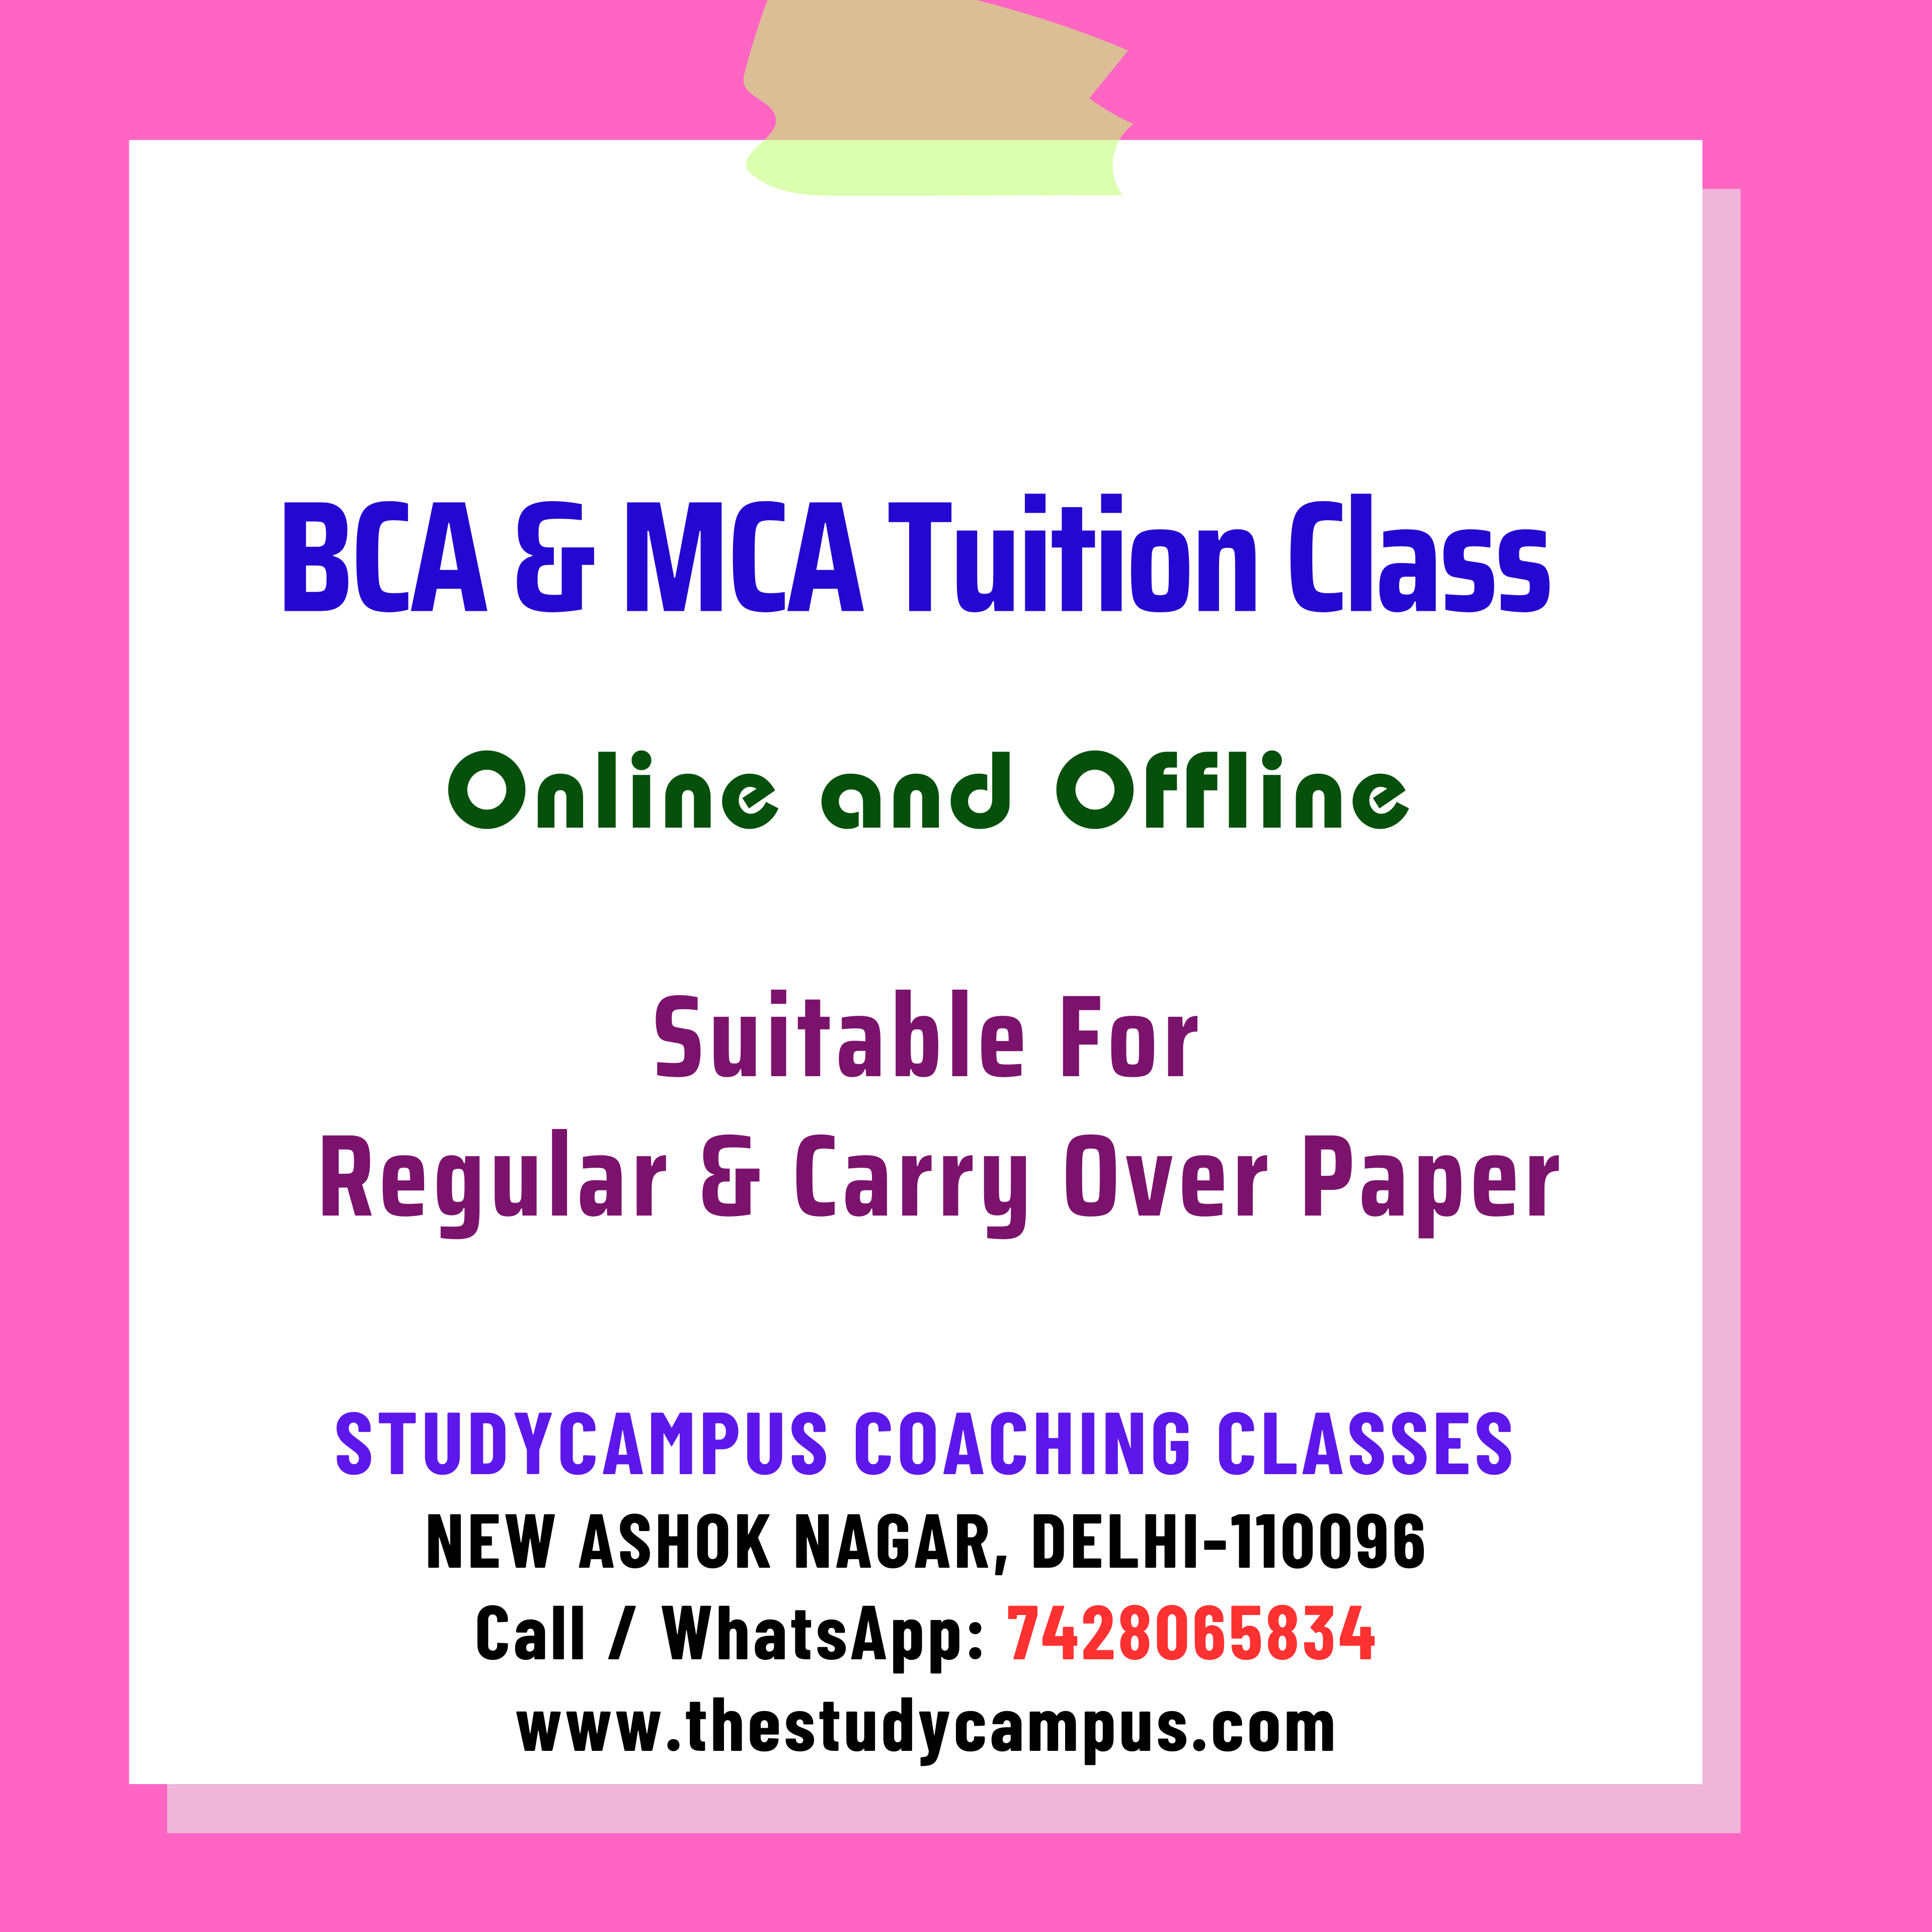 BCA & MCA Tuition ClassesEducation and LearningCoaching ClassesEast DelhiVasundhara Enclave